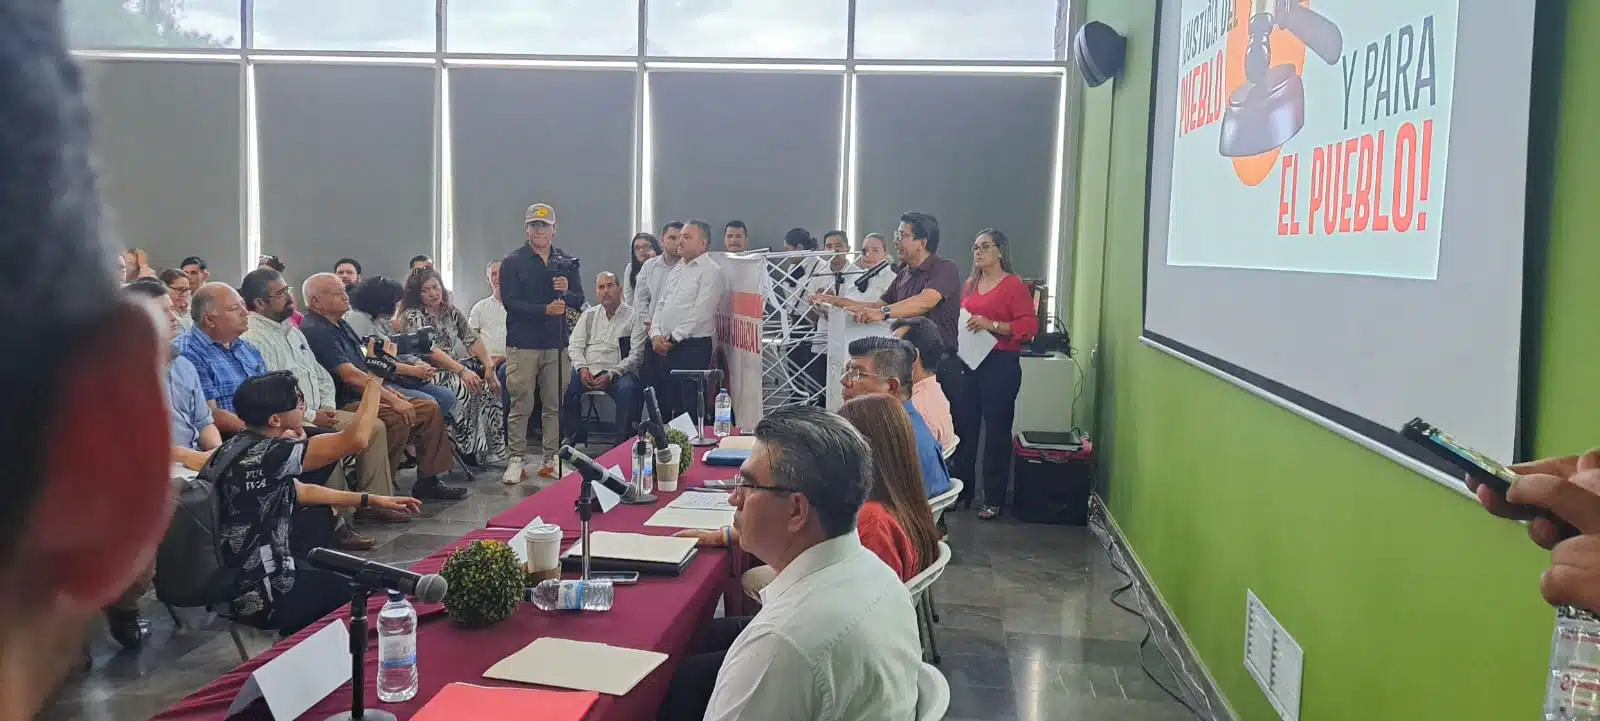 Panel organizado por Morena en Guasave